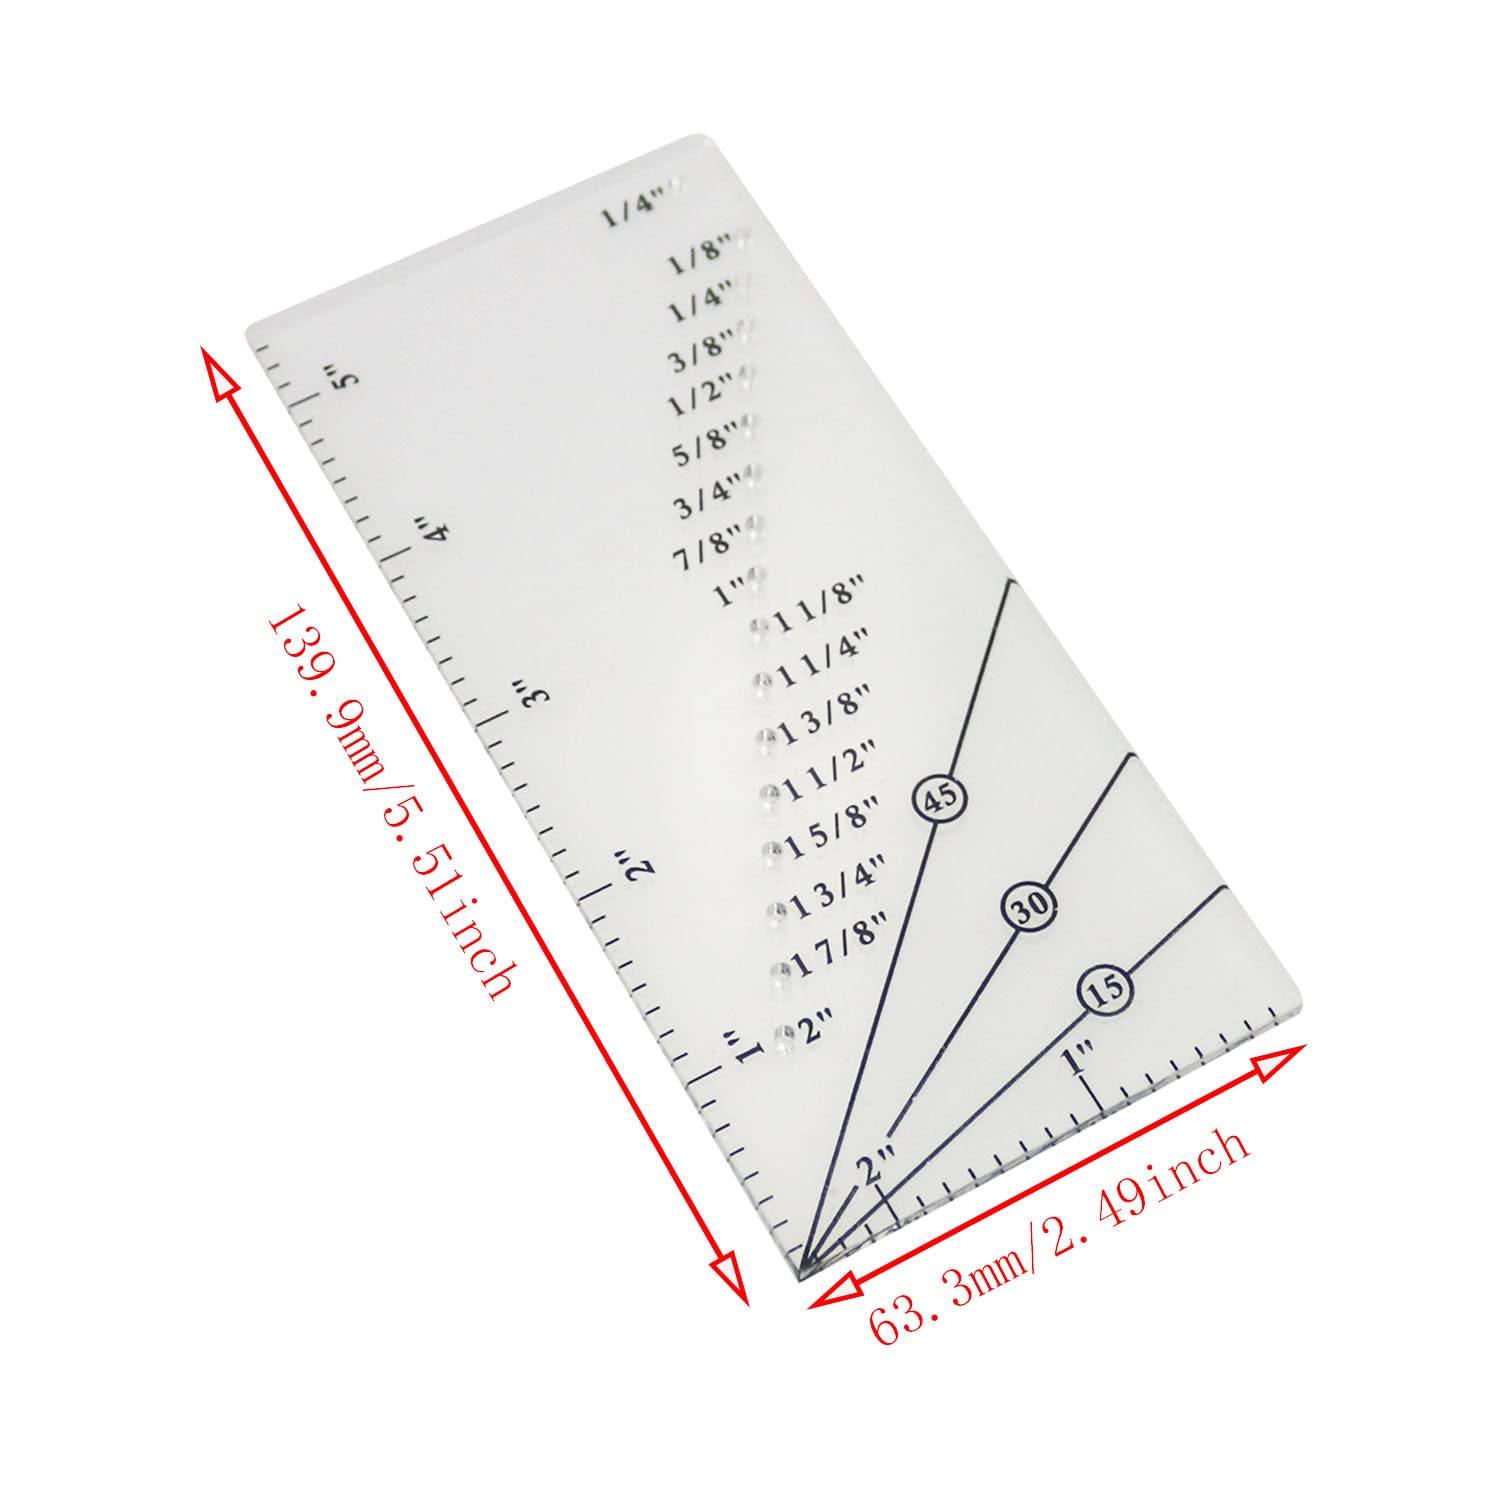 2 Inch Perforated Seam Seam Guide Ruler DIY Allowance Ruler Sew